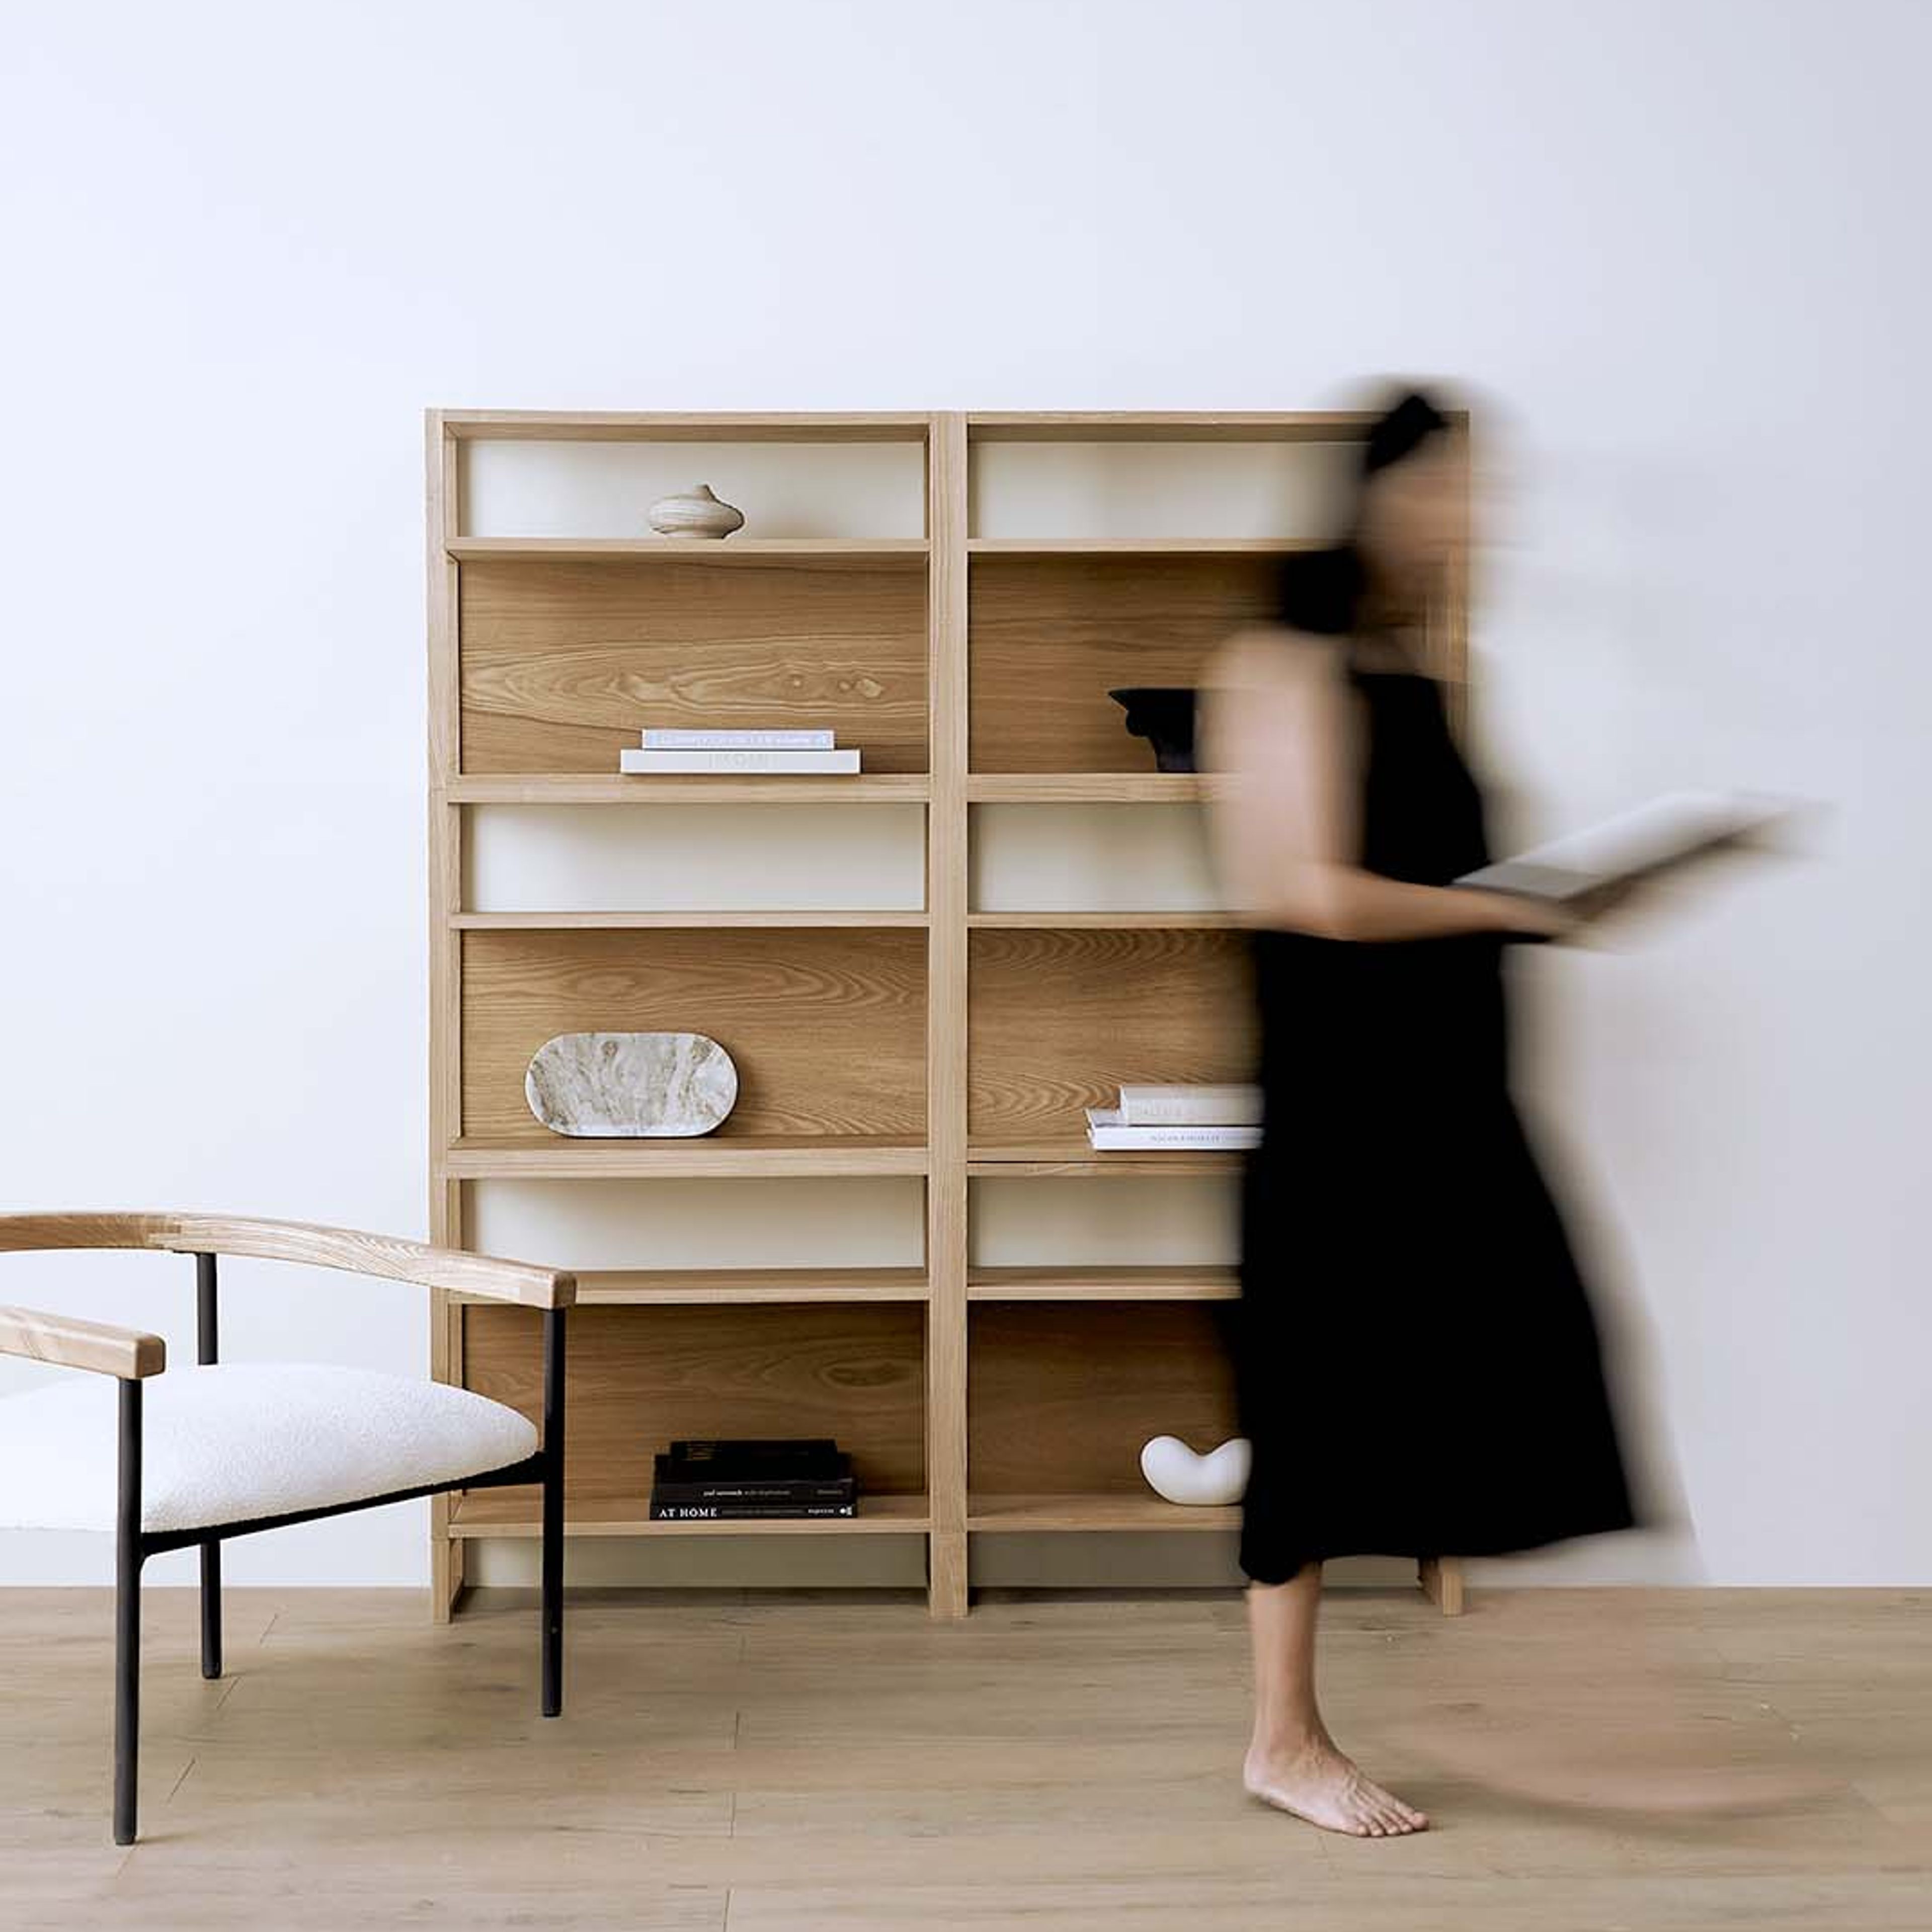 Nara Wood Modular Shelf - 6 Units